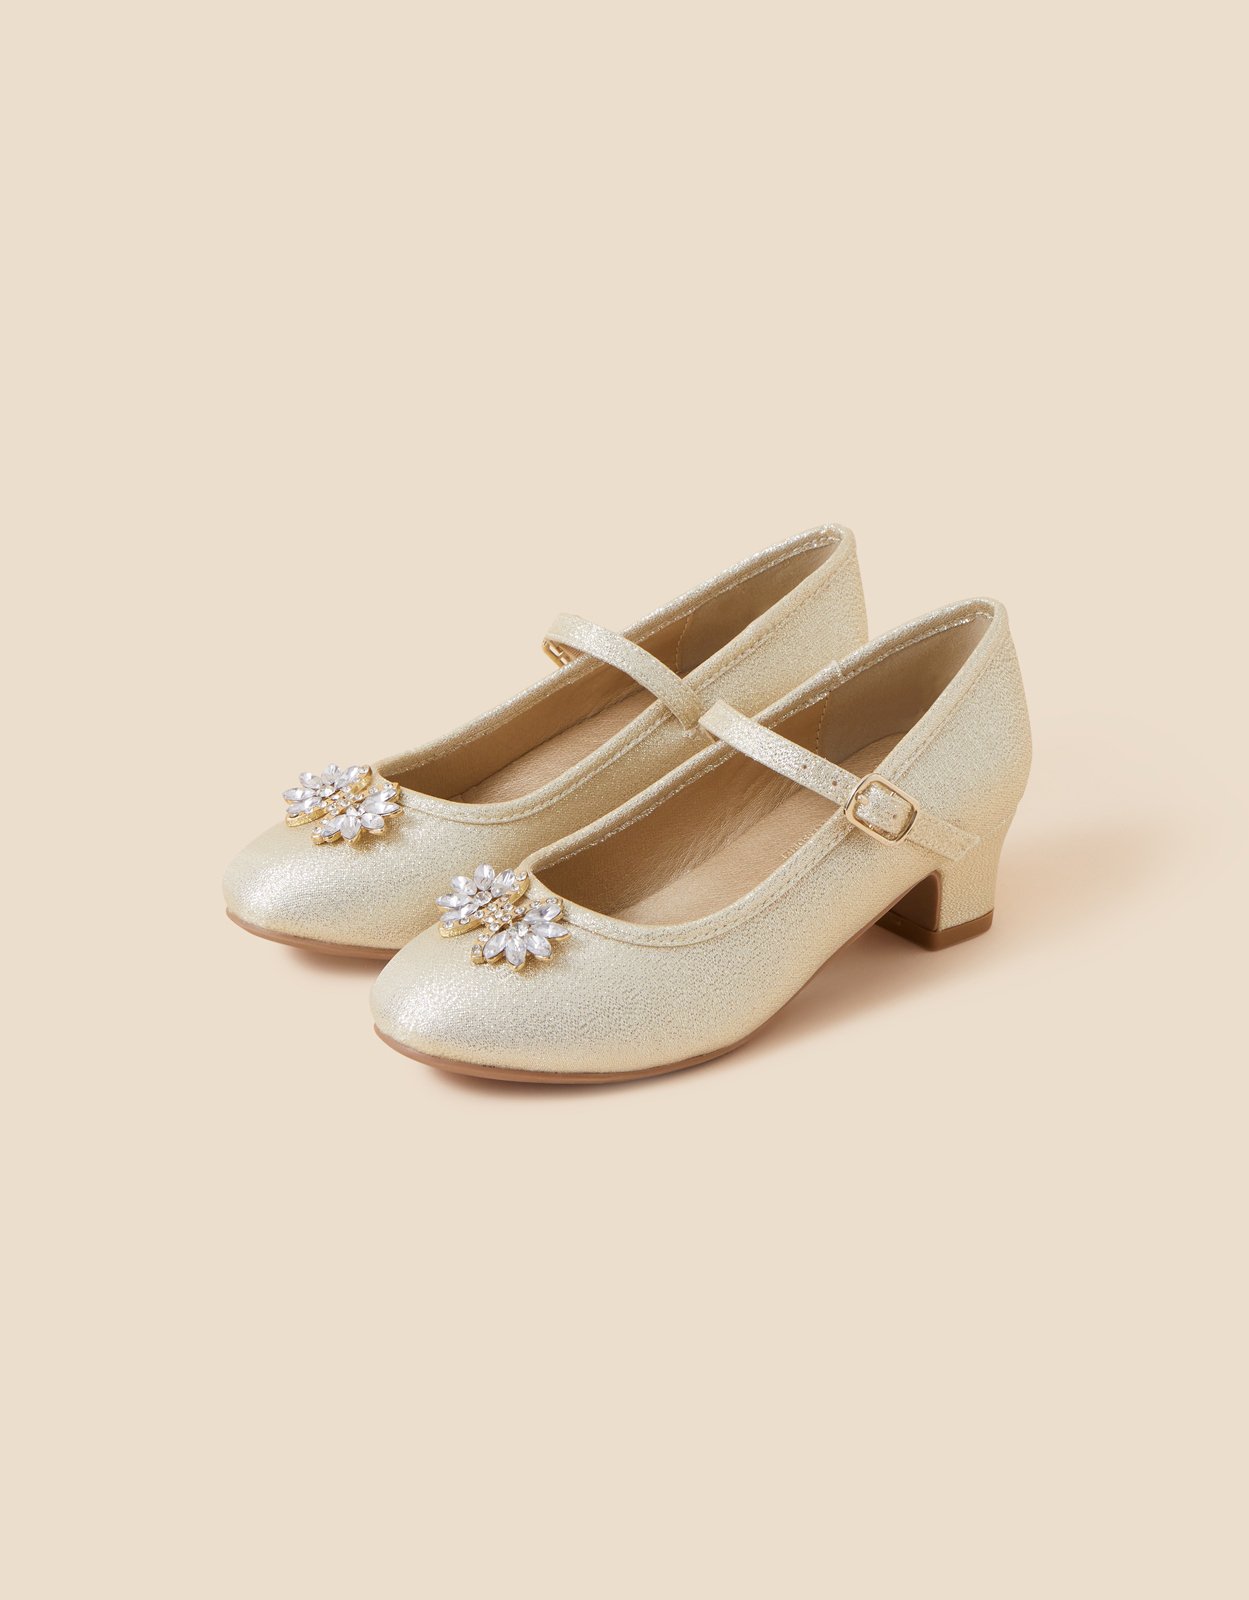 Accessorize Girl's Girls Shimmer Gem Flamenco Shoes Gold, Size: 10